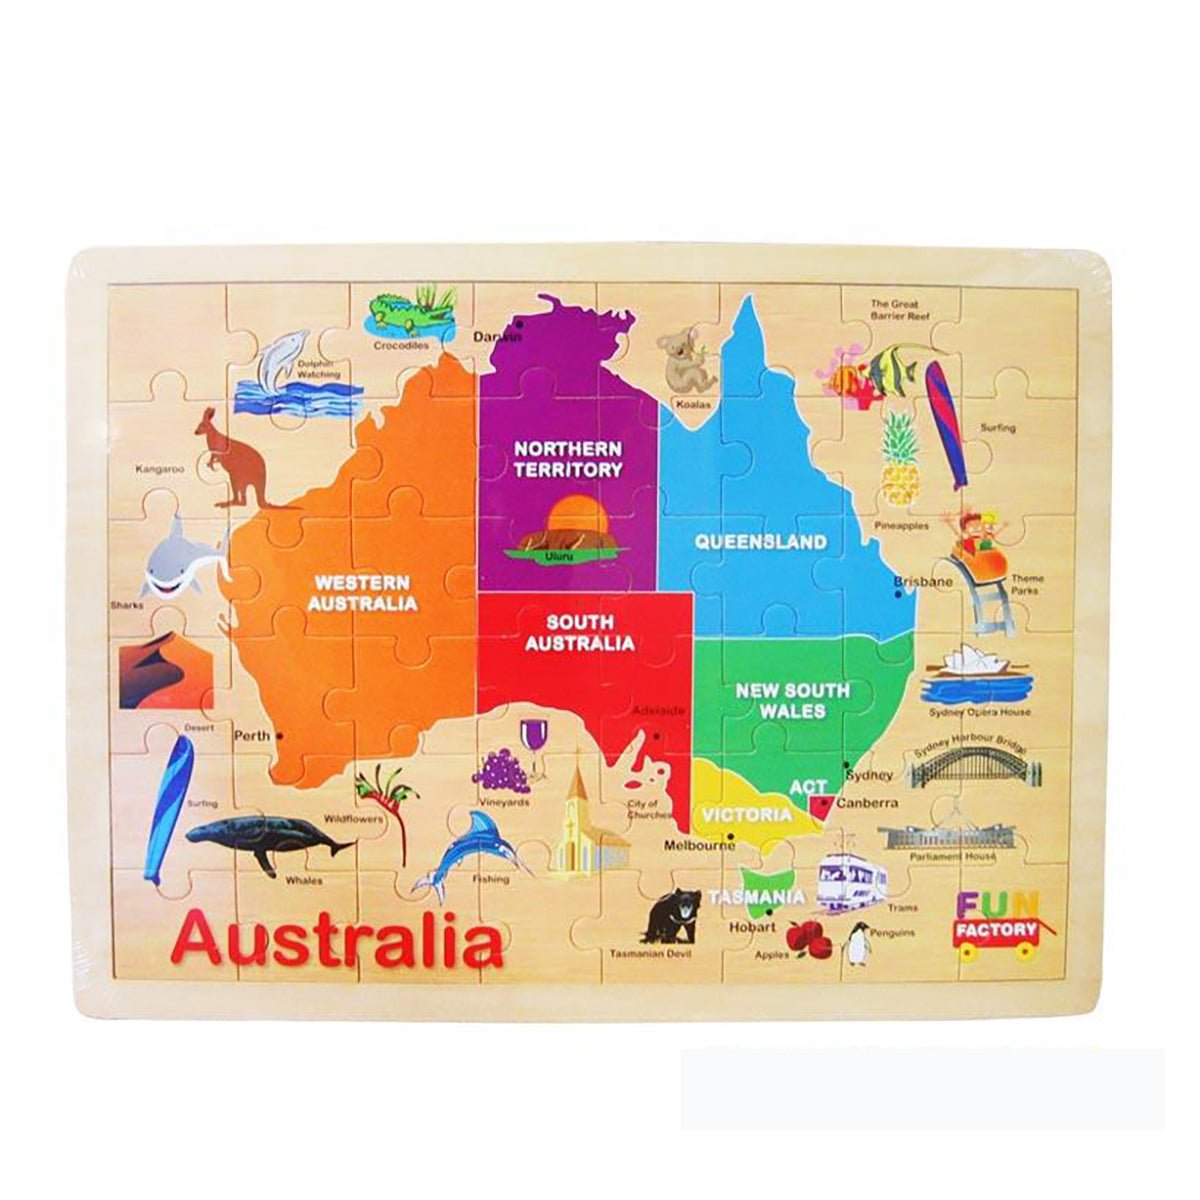 Australia Map Jigsaw | Fun factory